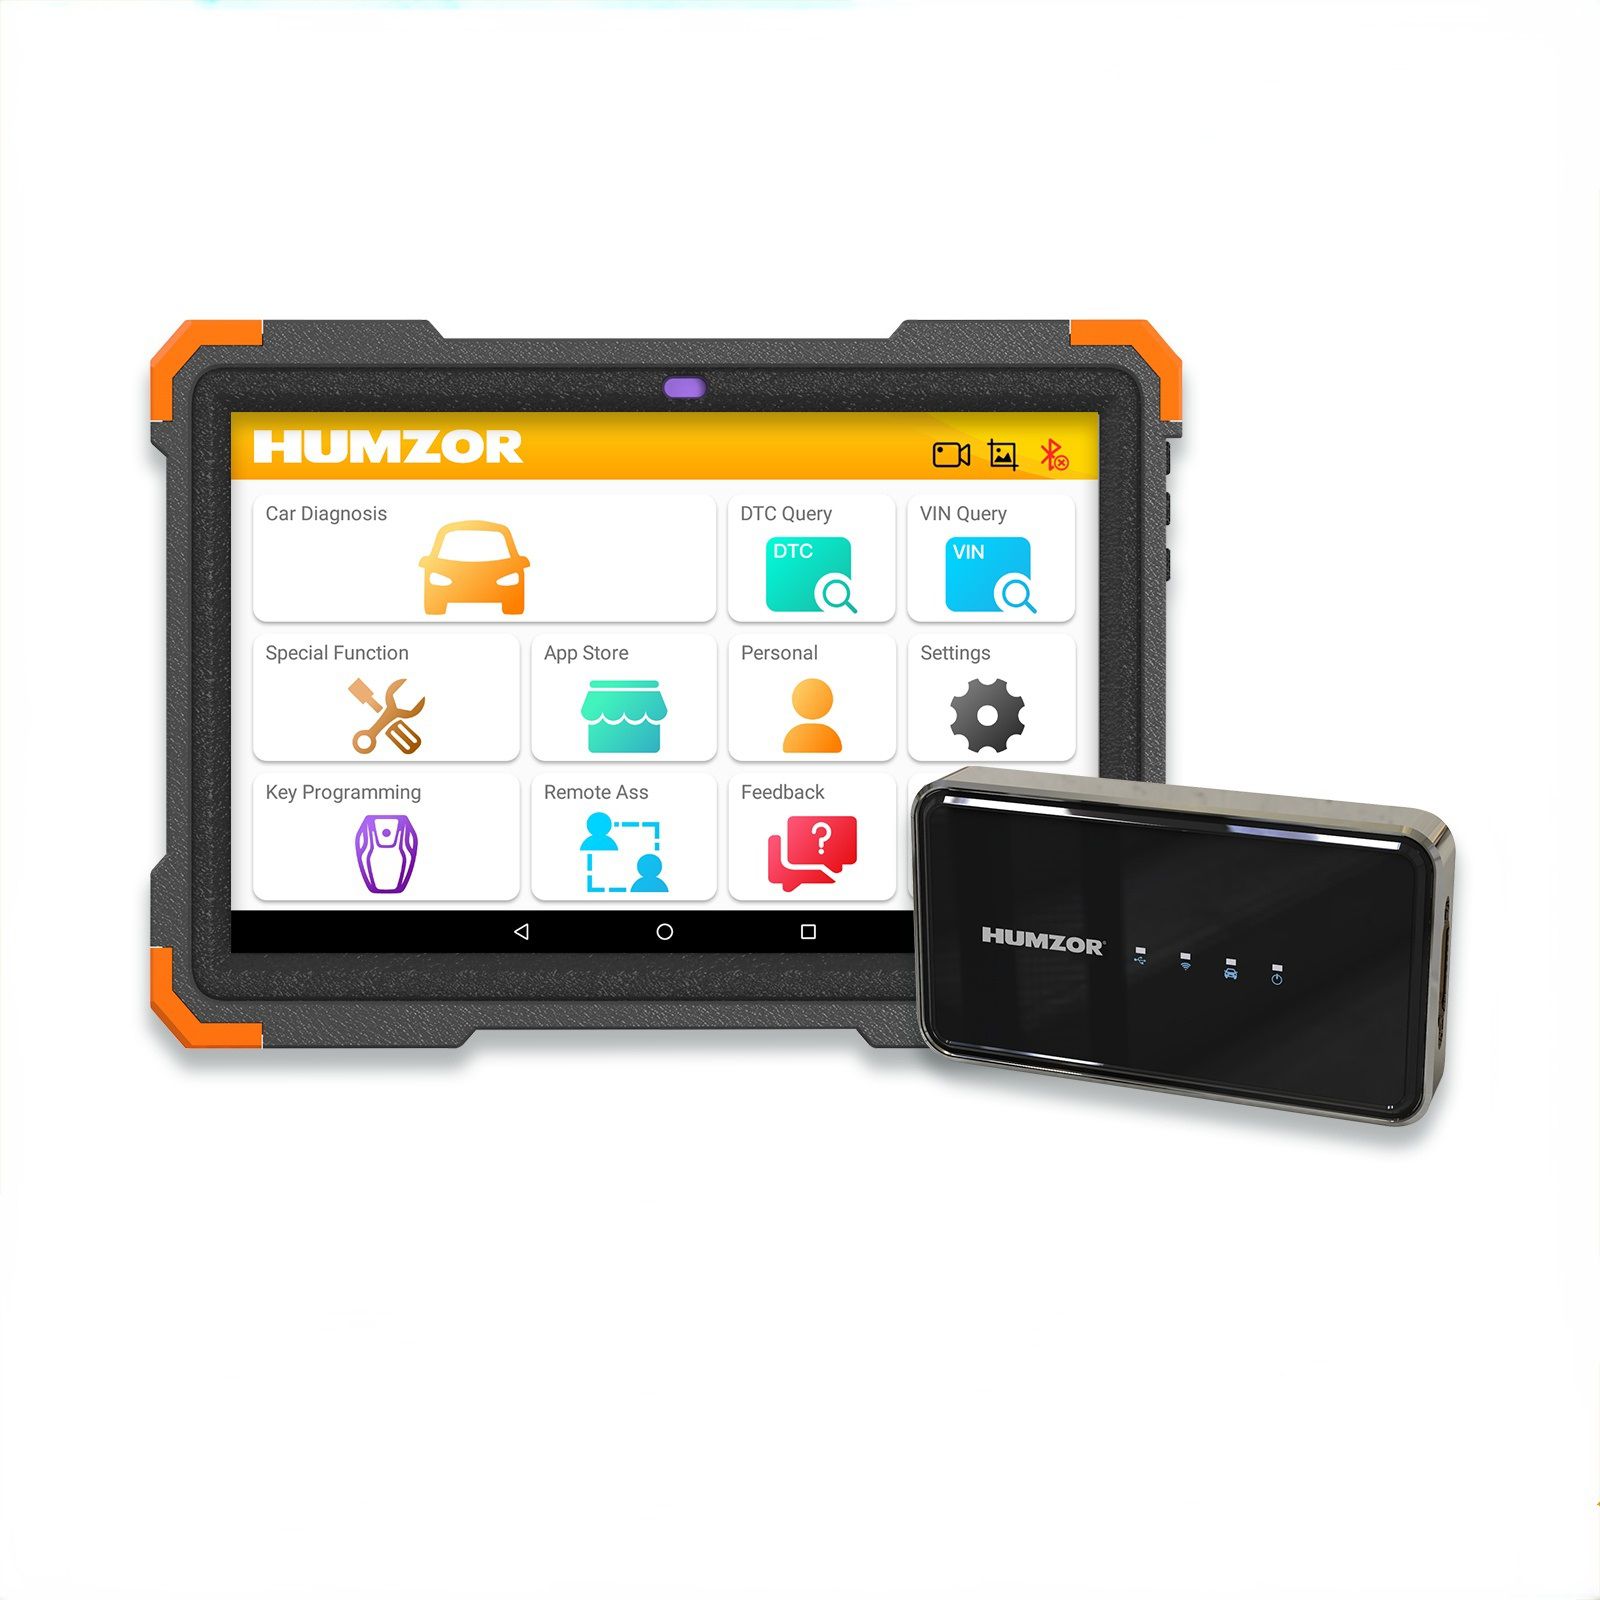 Humzor NS366S Car Diagnostic Scanner Tablet Full System for SAS CVT Gear Learning 13 Reset Automotive OBD 1/2 Diagnostic Tool